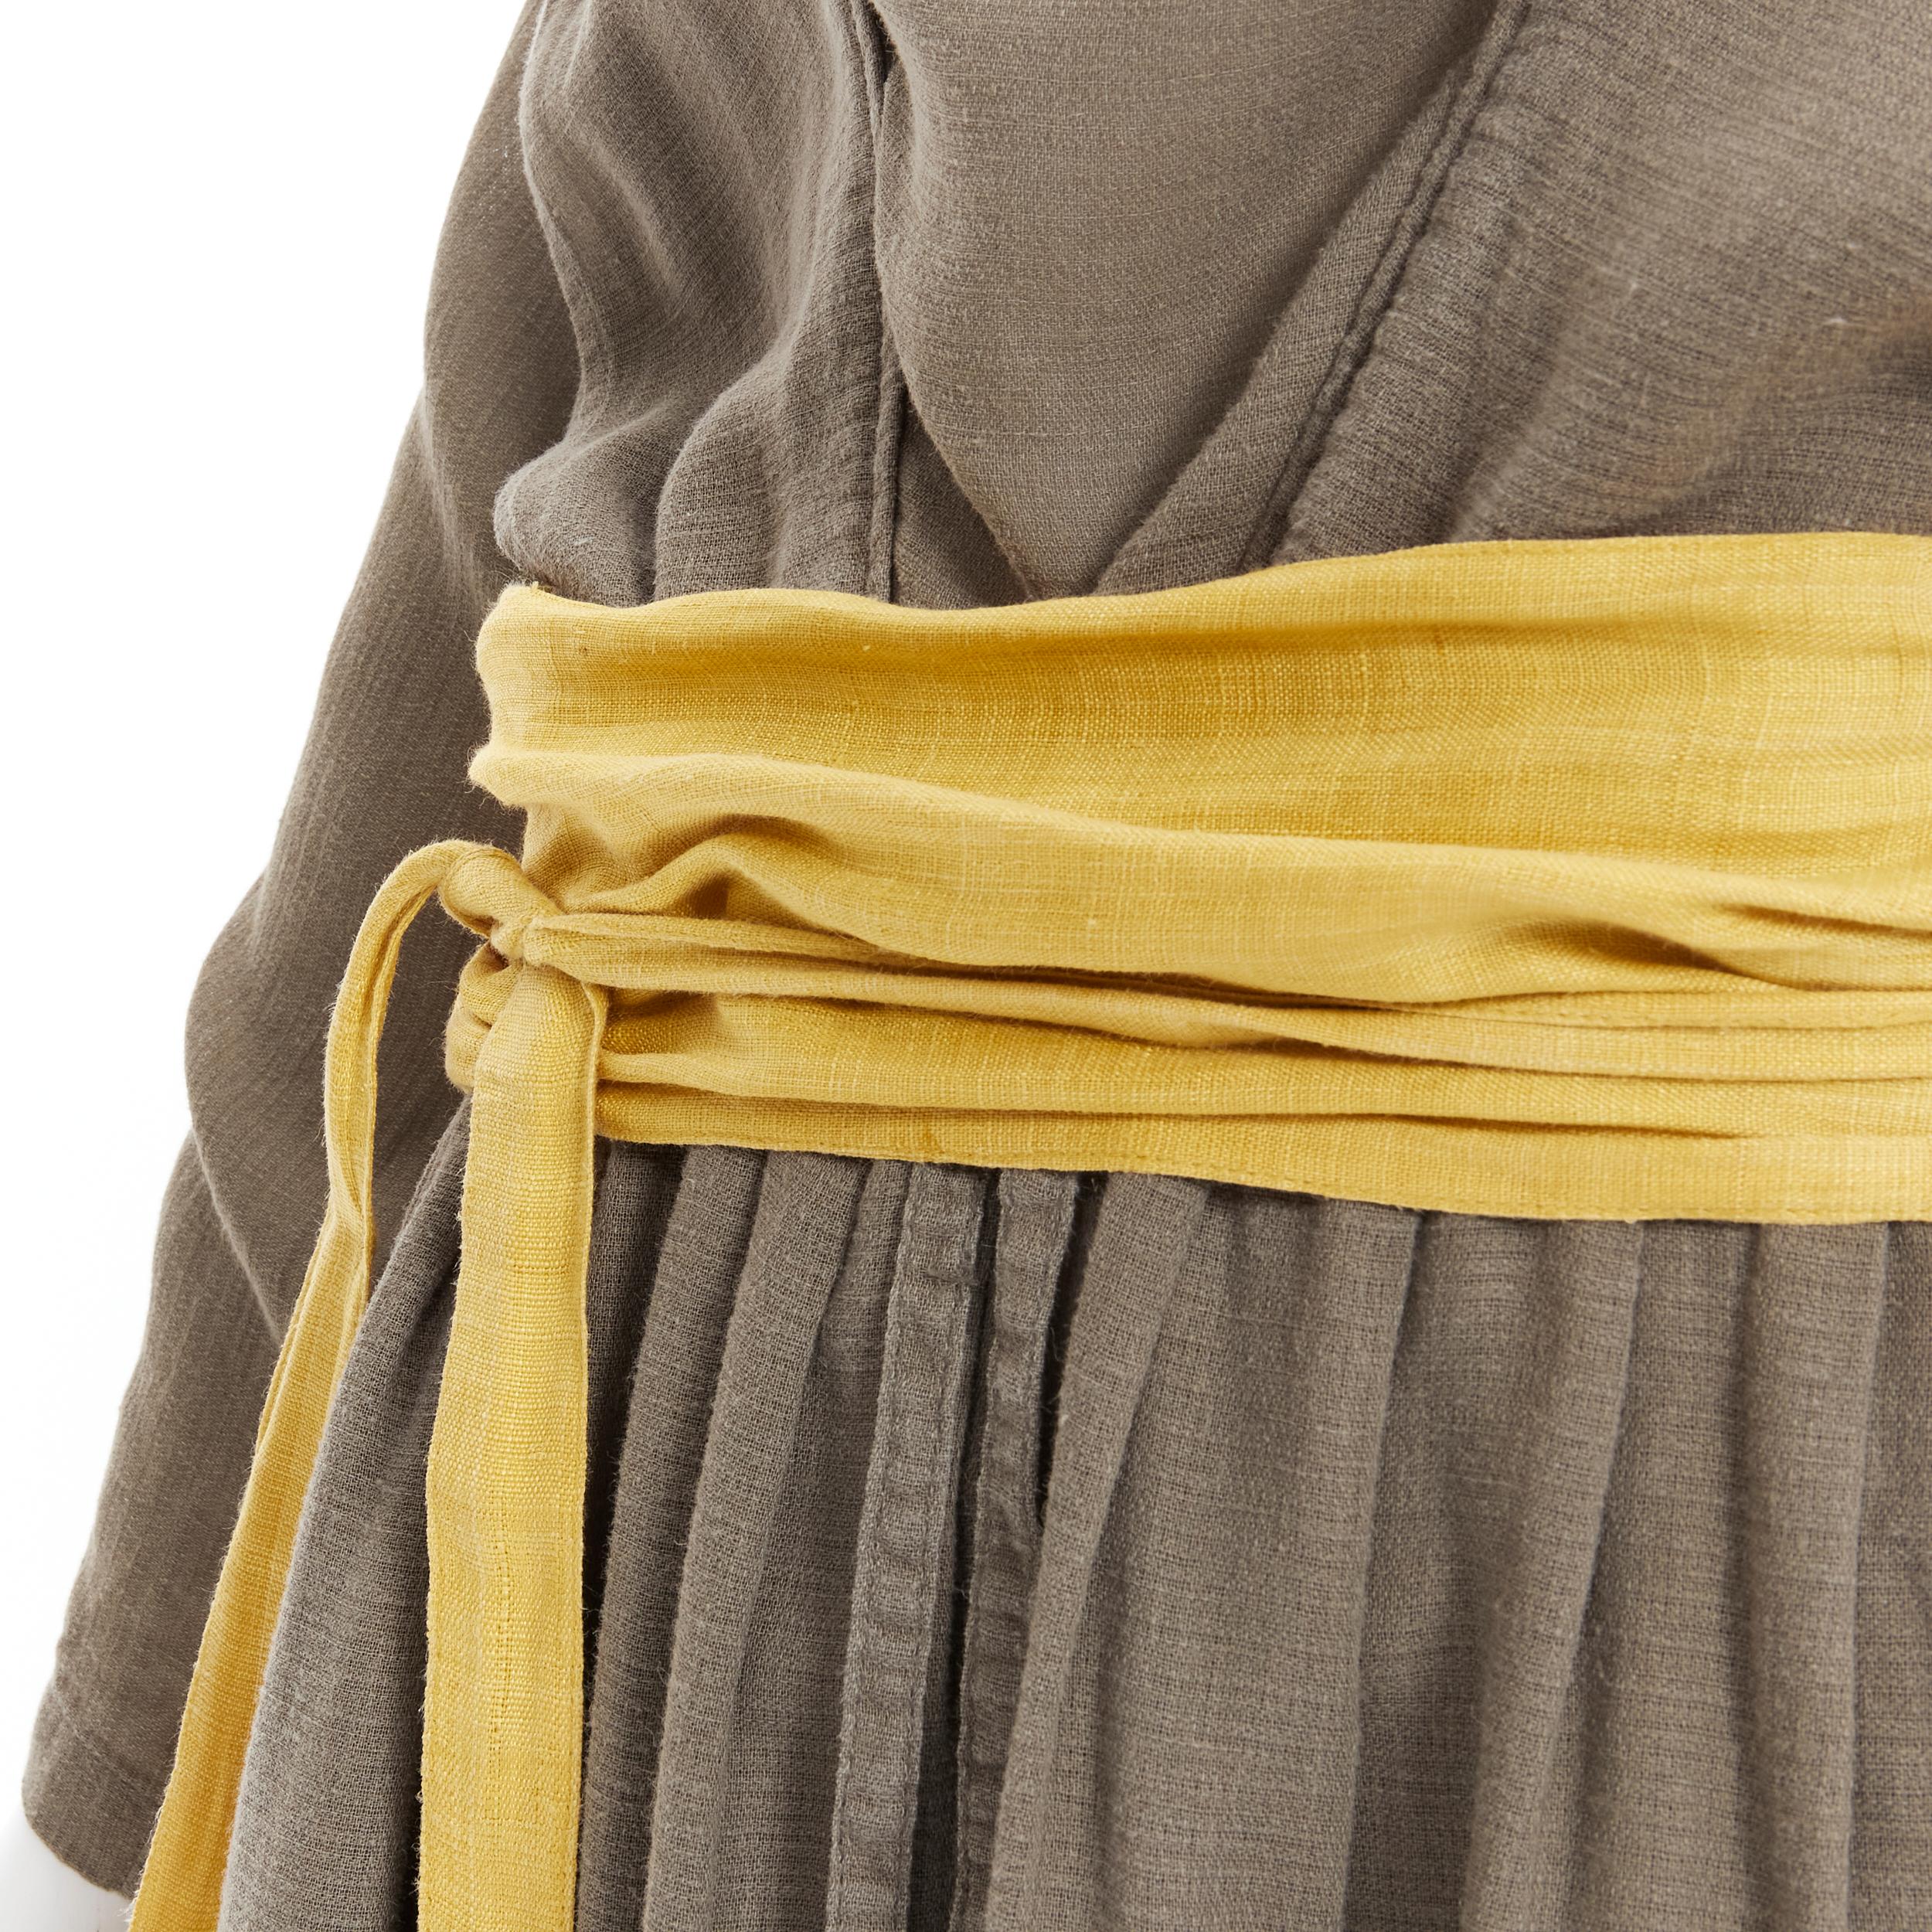 vintage ISSEY MIYAKE 1980's beige linen yellow obi belt cowl neck dress M rare 
Reference: TGAS/B00802 
Brand: Issey Miyake 
Designer: Issey Miyake 
Collection: 1980's 
Material: Linen 
Color: Beige 
Pattern: Solid 
Extra Detail: Obi tie belt. Cowl